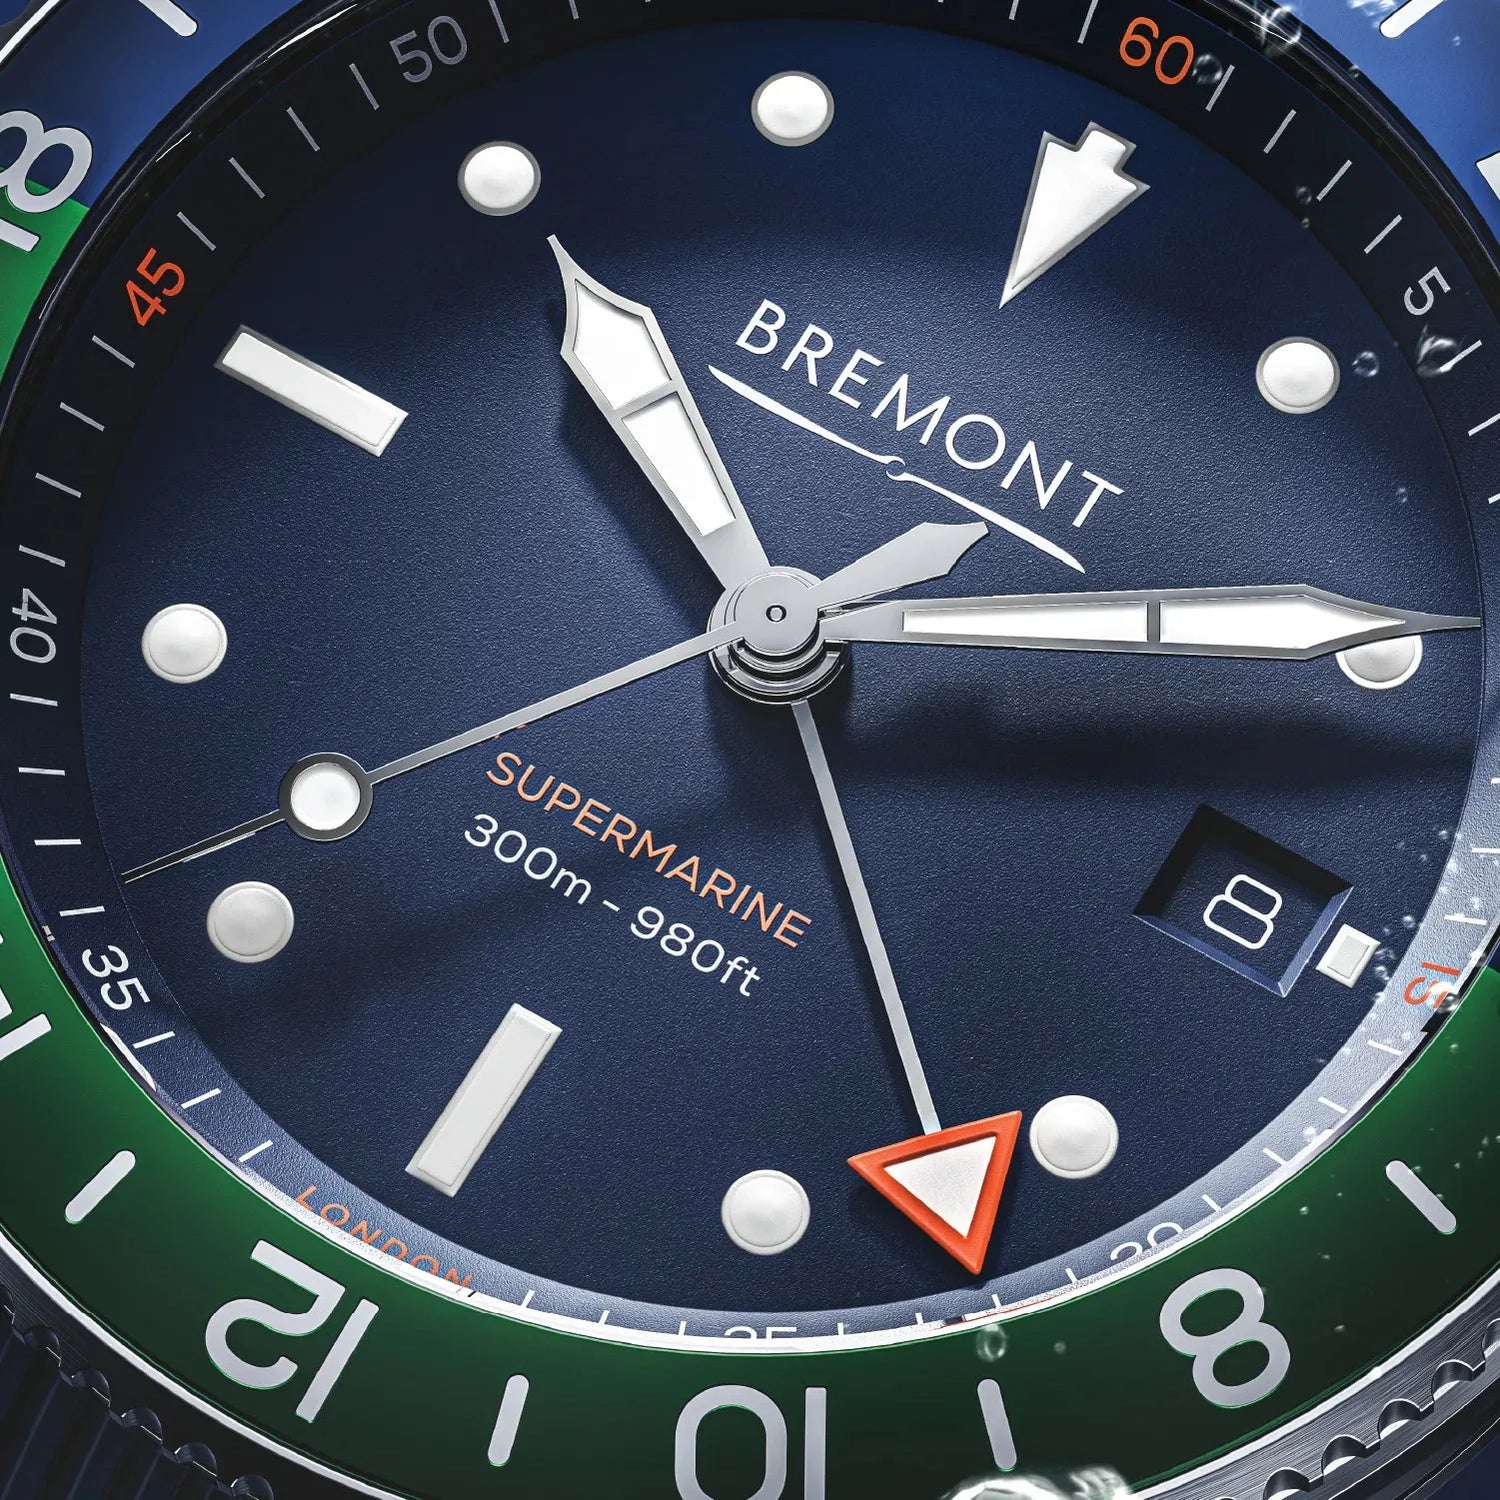 Bremont Watch Company Watches | Mens | Supermarine Regular length (15cm - 19cm wrist size) S302 (BLGN Rubber)